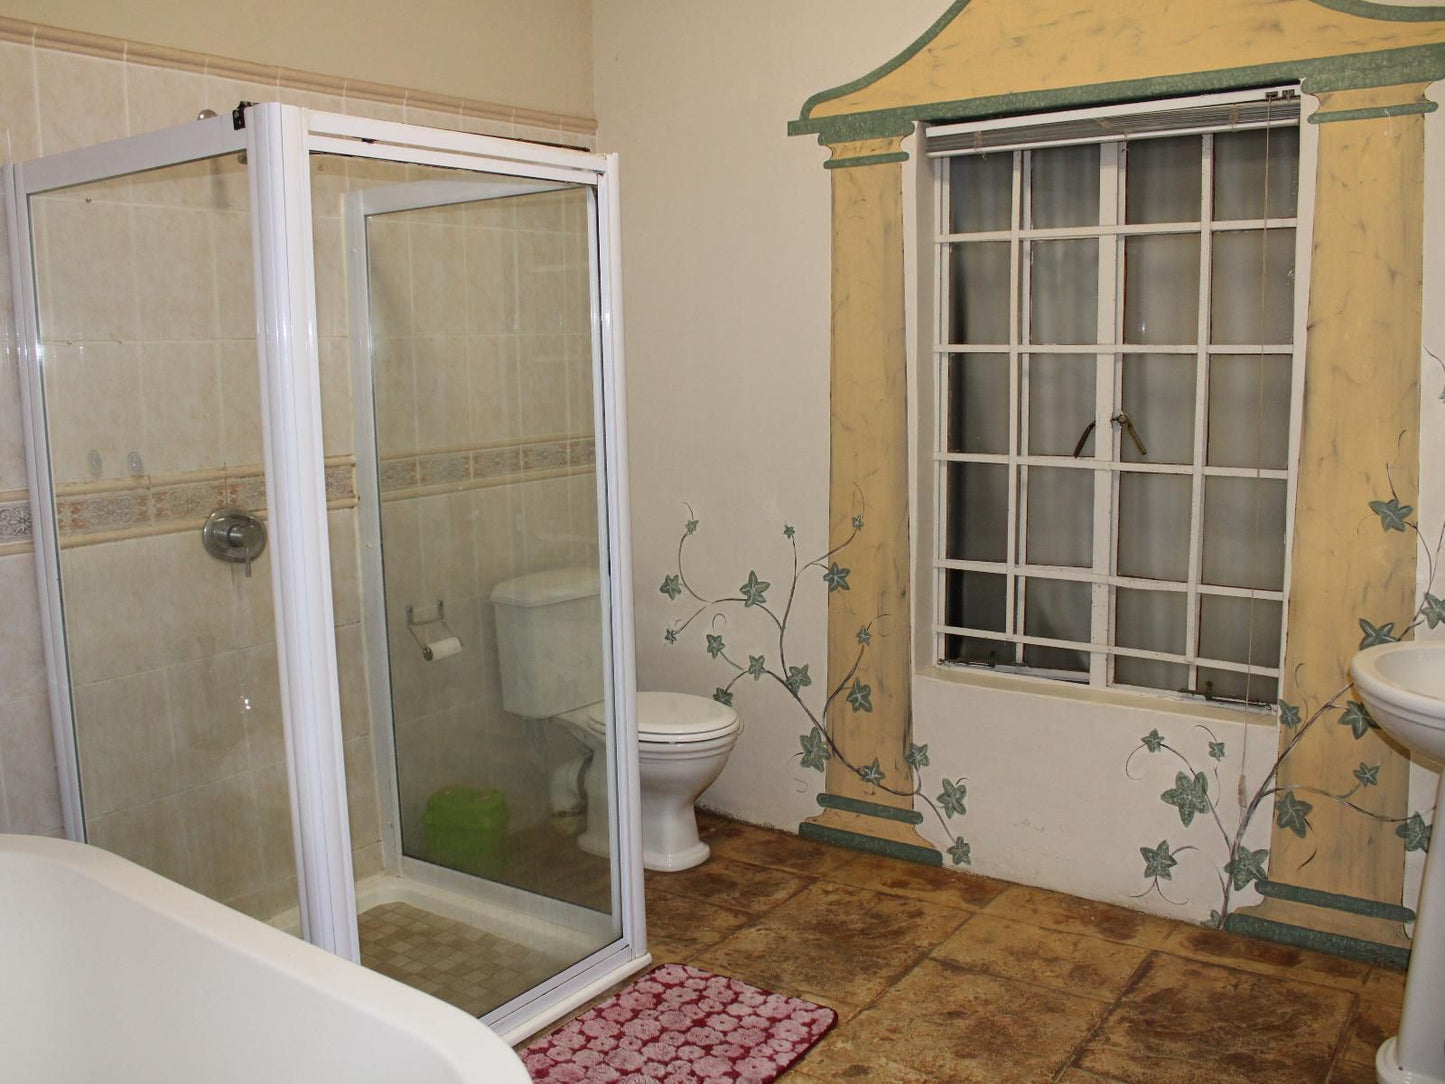 Mh Guest Farm Elandshoek Mpumalanga South Africa Door, Architecture, Bathroom